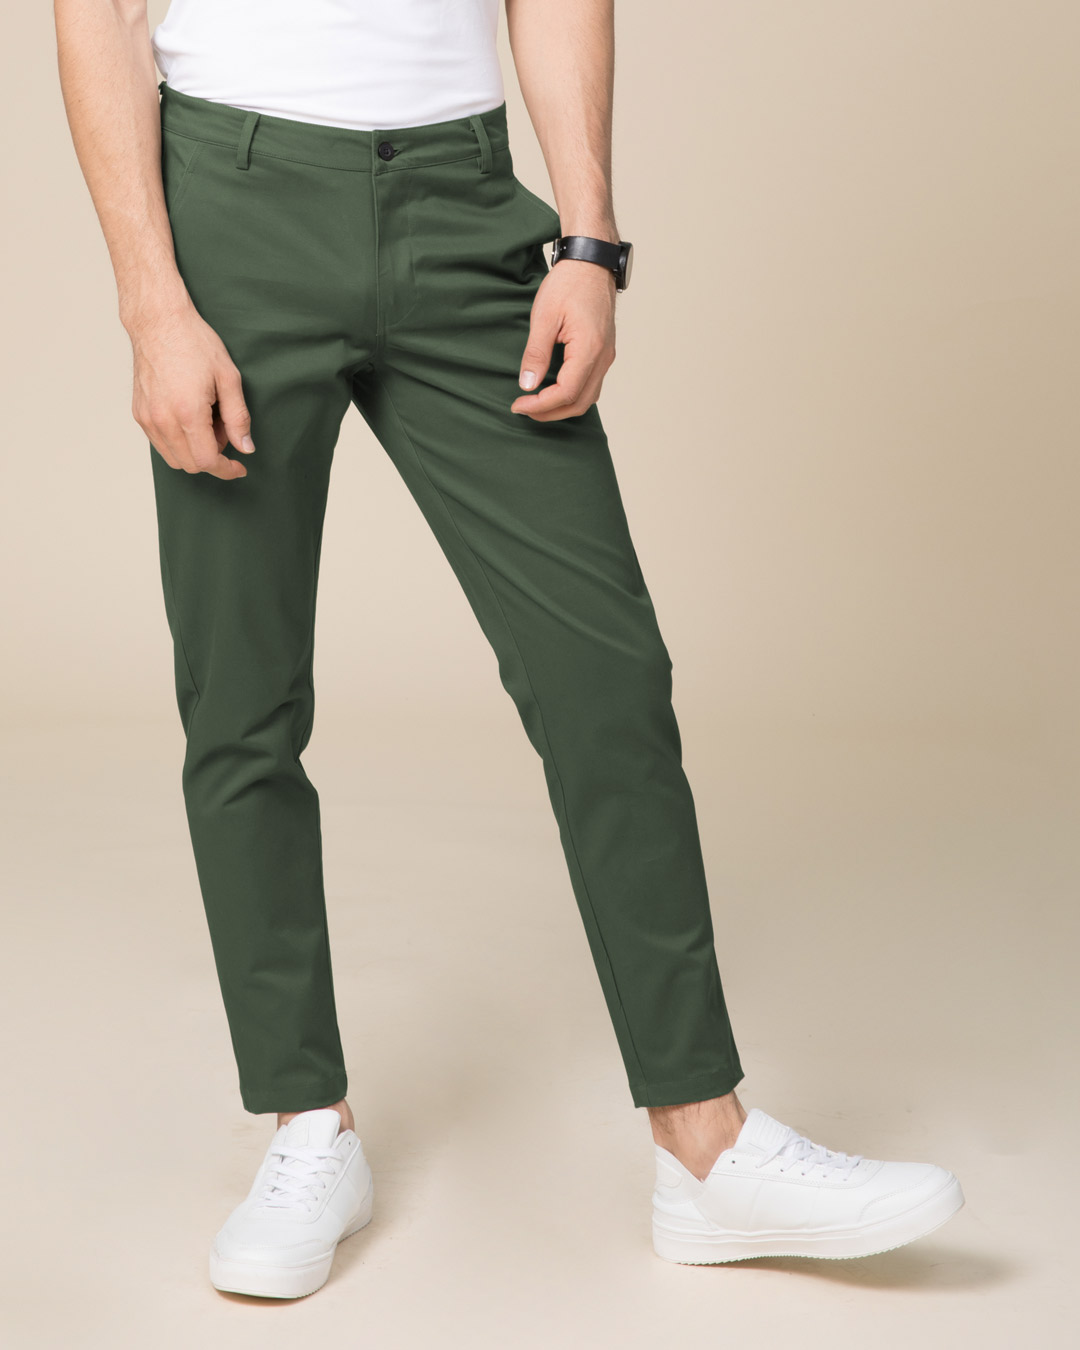 Buy Basil Green Slim Fit Cotton Chino Pants Online at Bewakoof